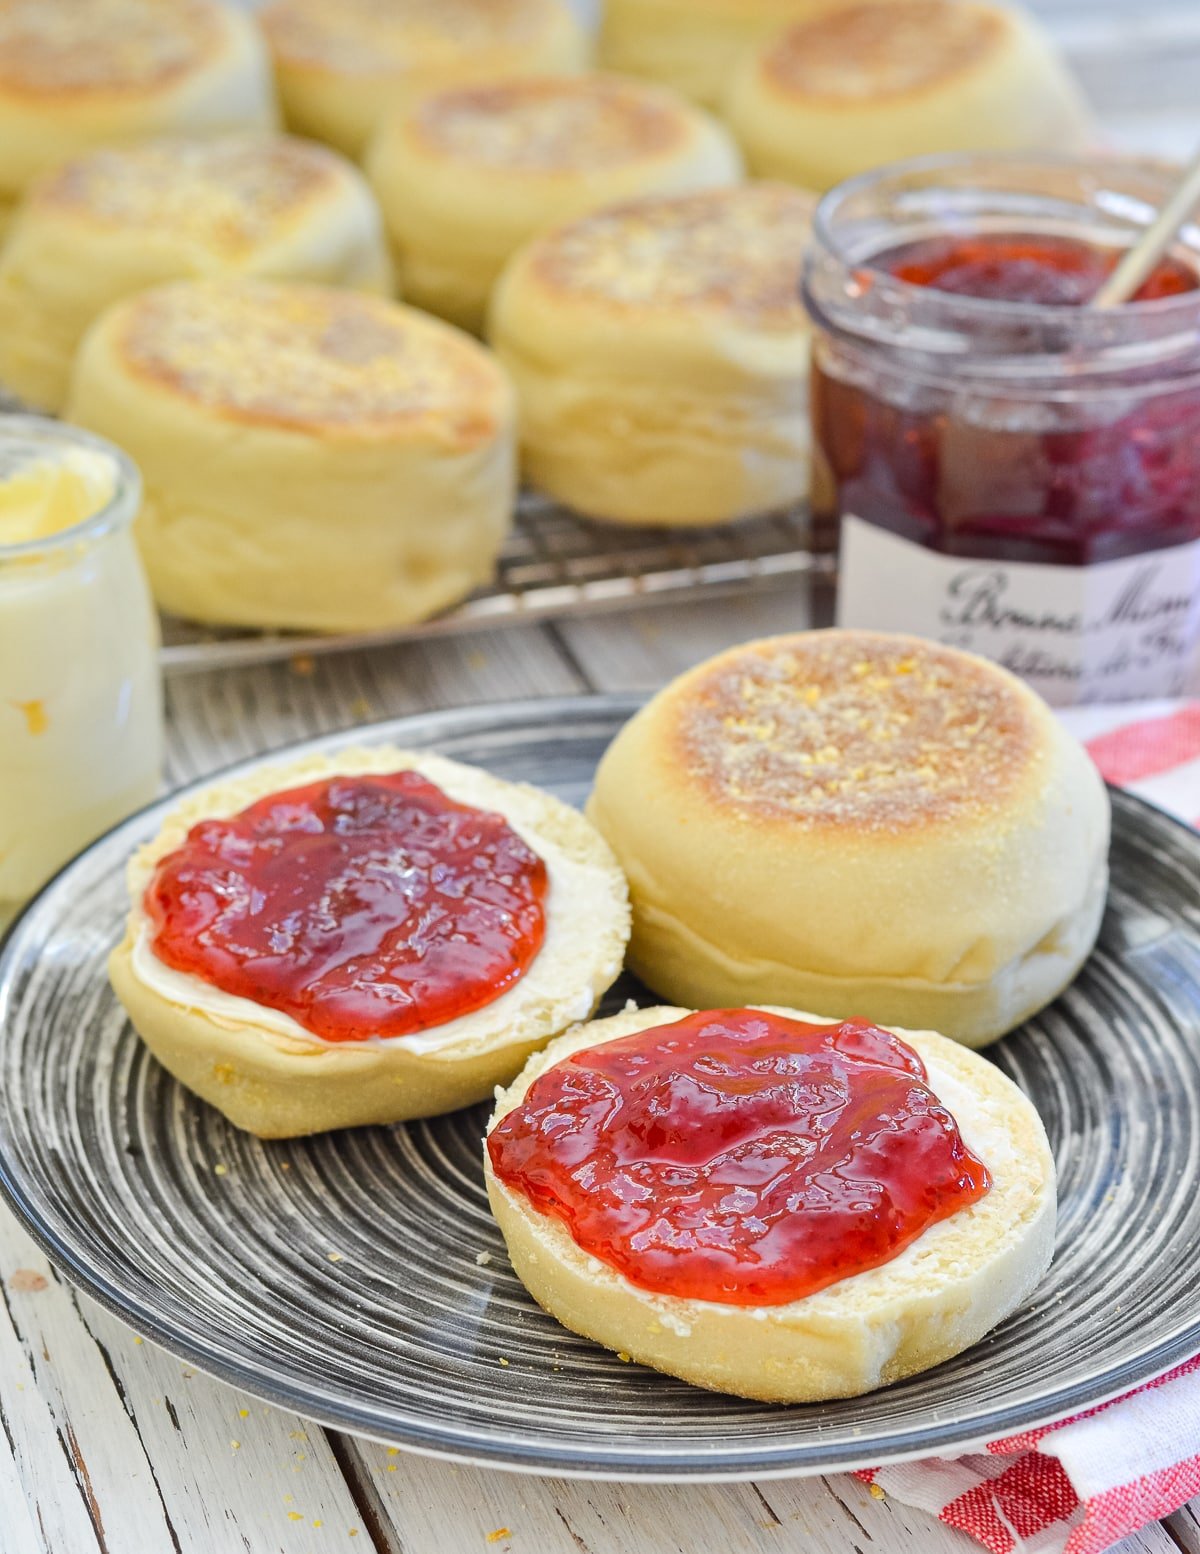 English muffins split with jam